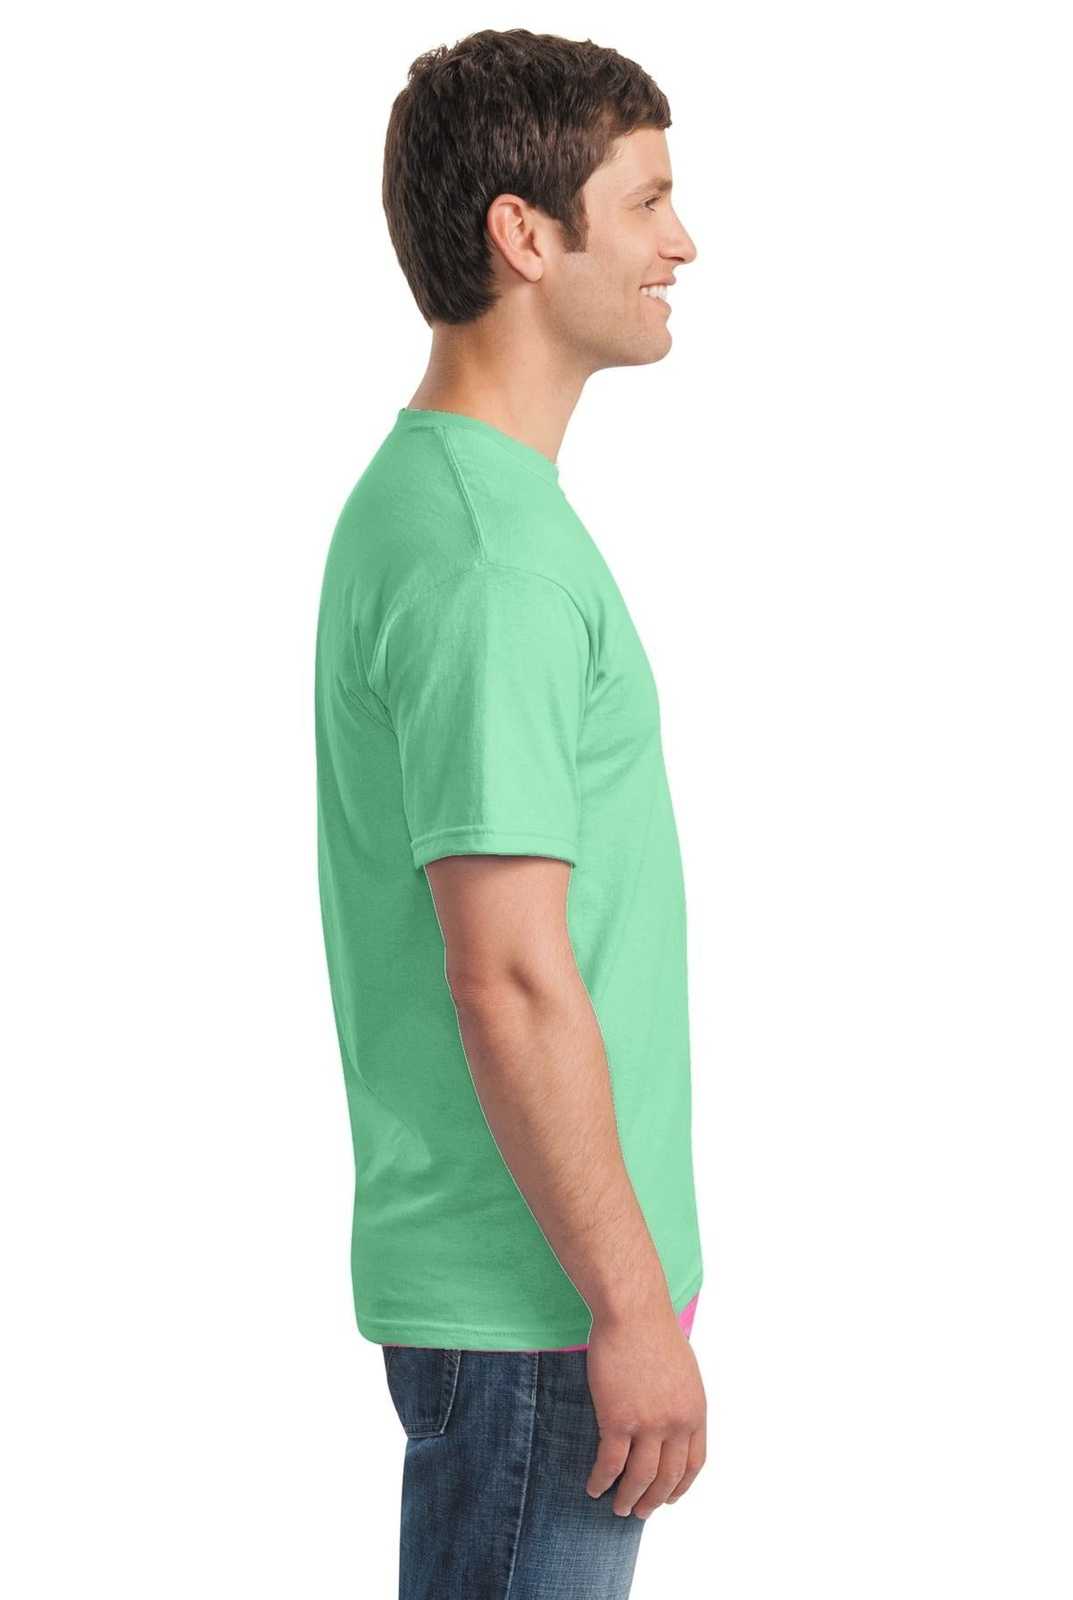 Gildan 5000 Heavy Cotton 100% Cotton T-Shirt - Mint Green - HIT a Double